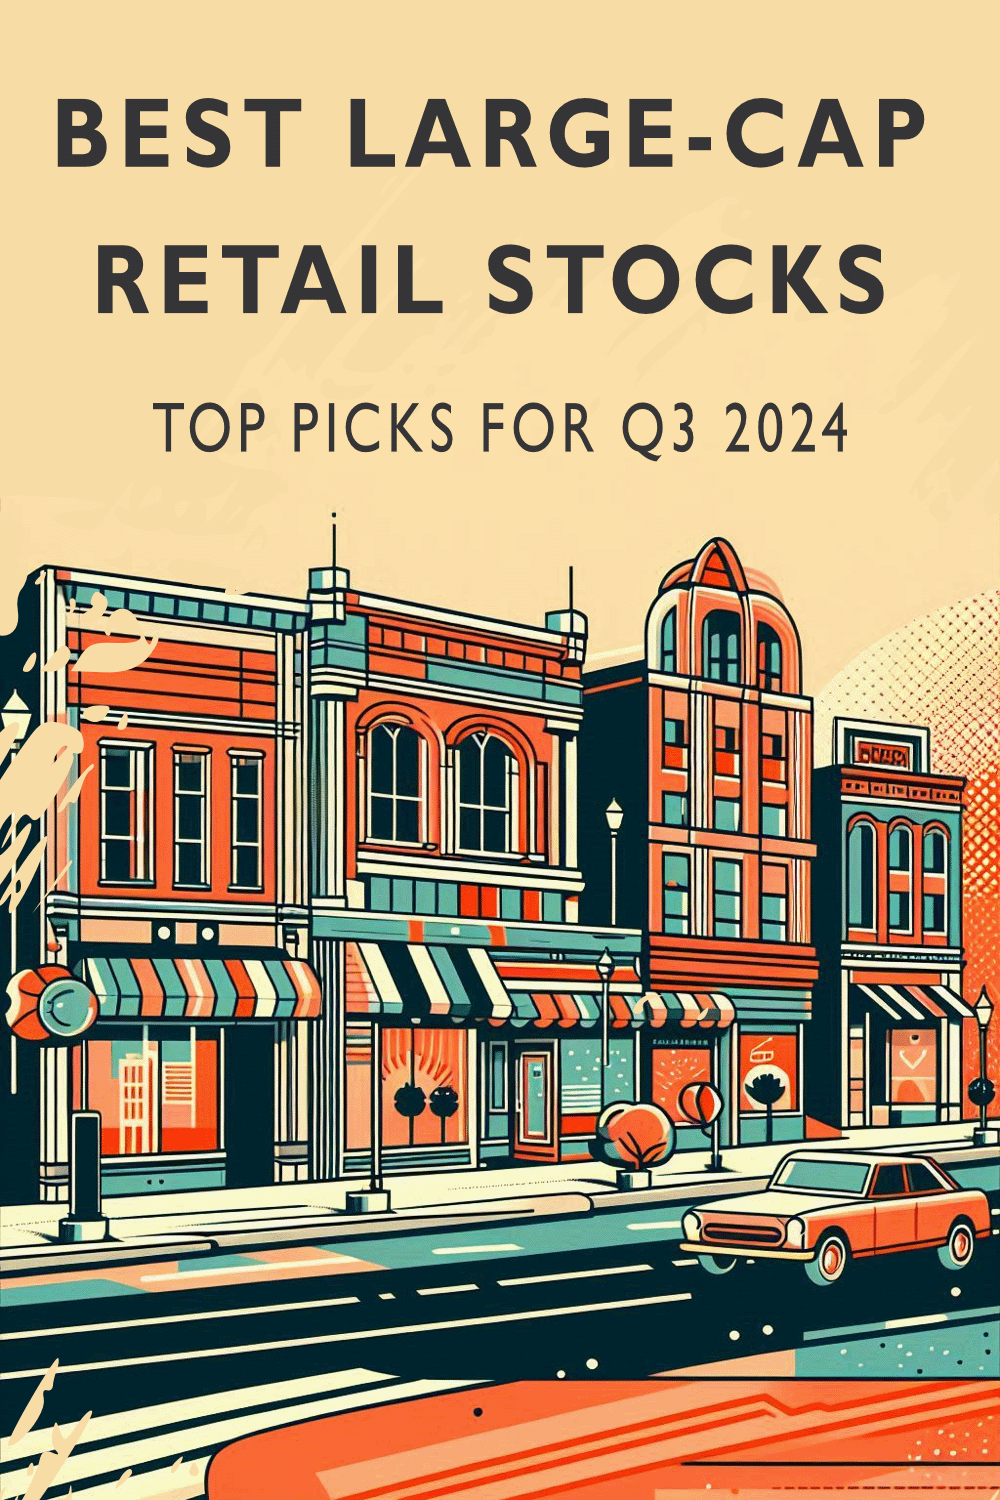 Best large-cap retail stocks to invest in Q3 2024